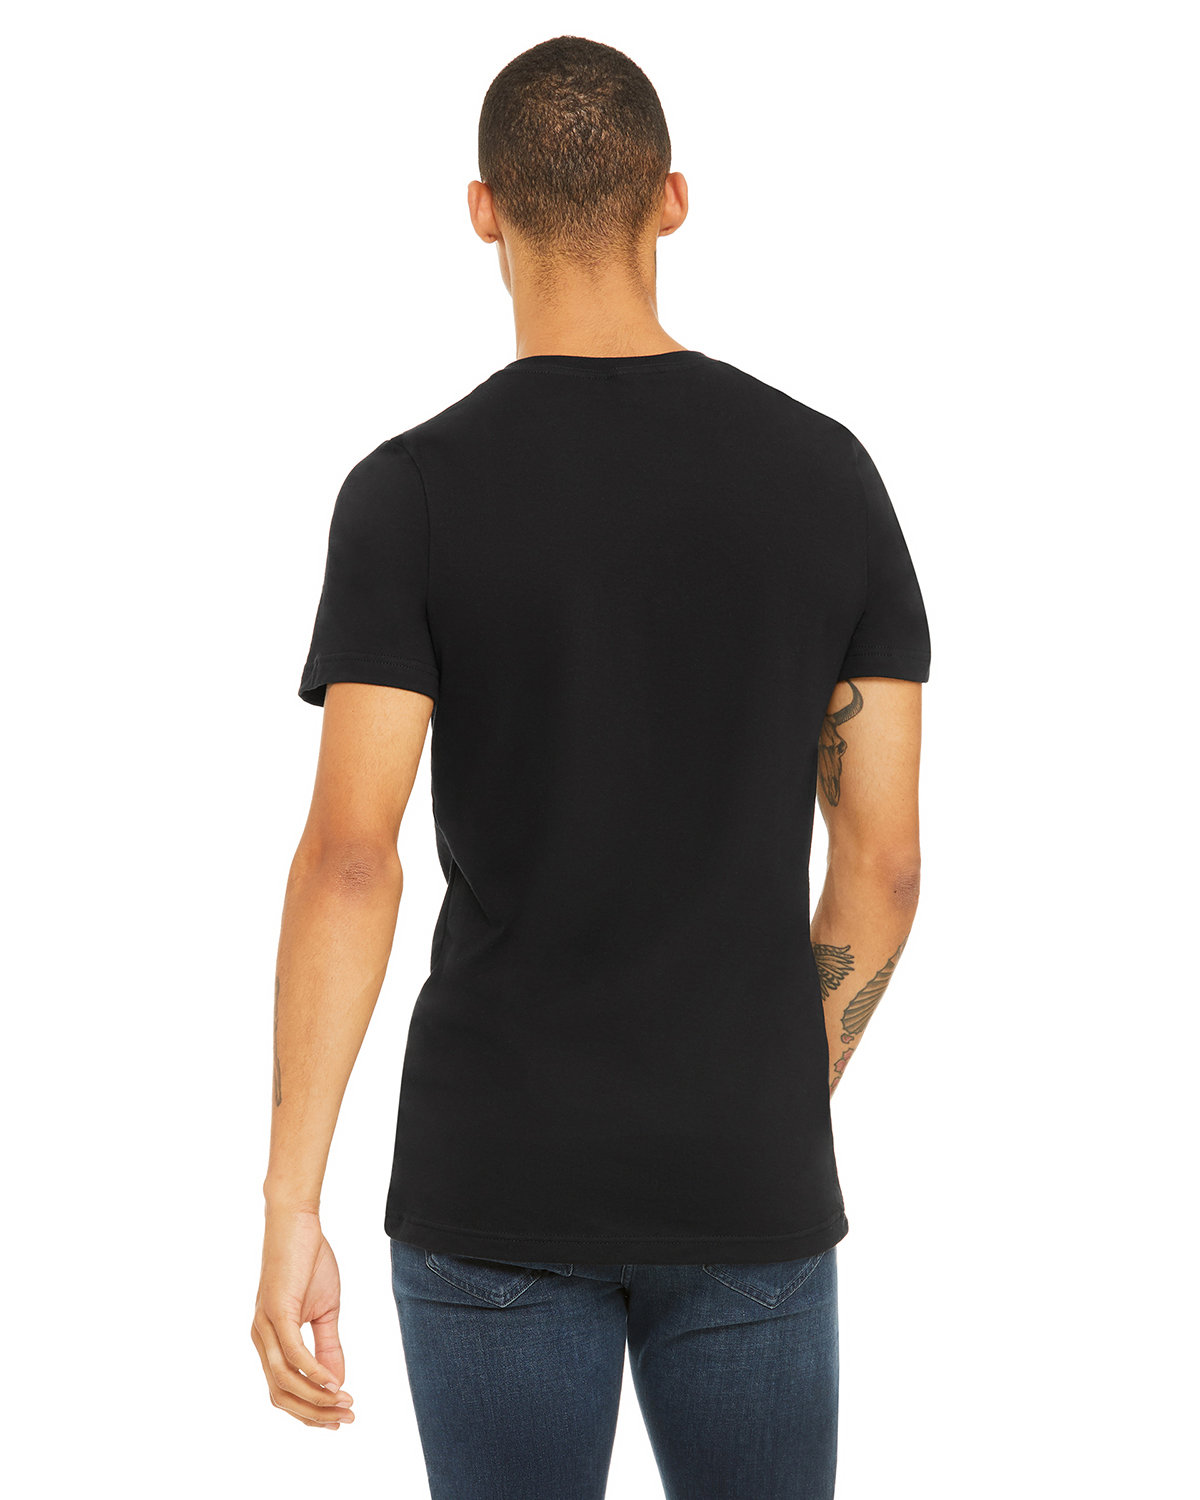 Bella + Canvas 3005 | Unisex Jersey Short Sleeve V-Neck T-Shirt ...